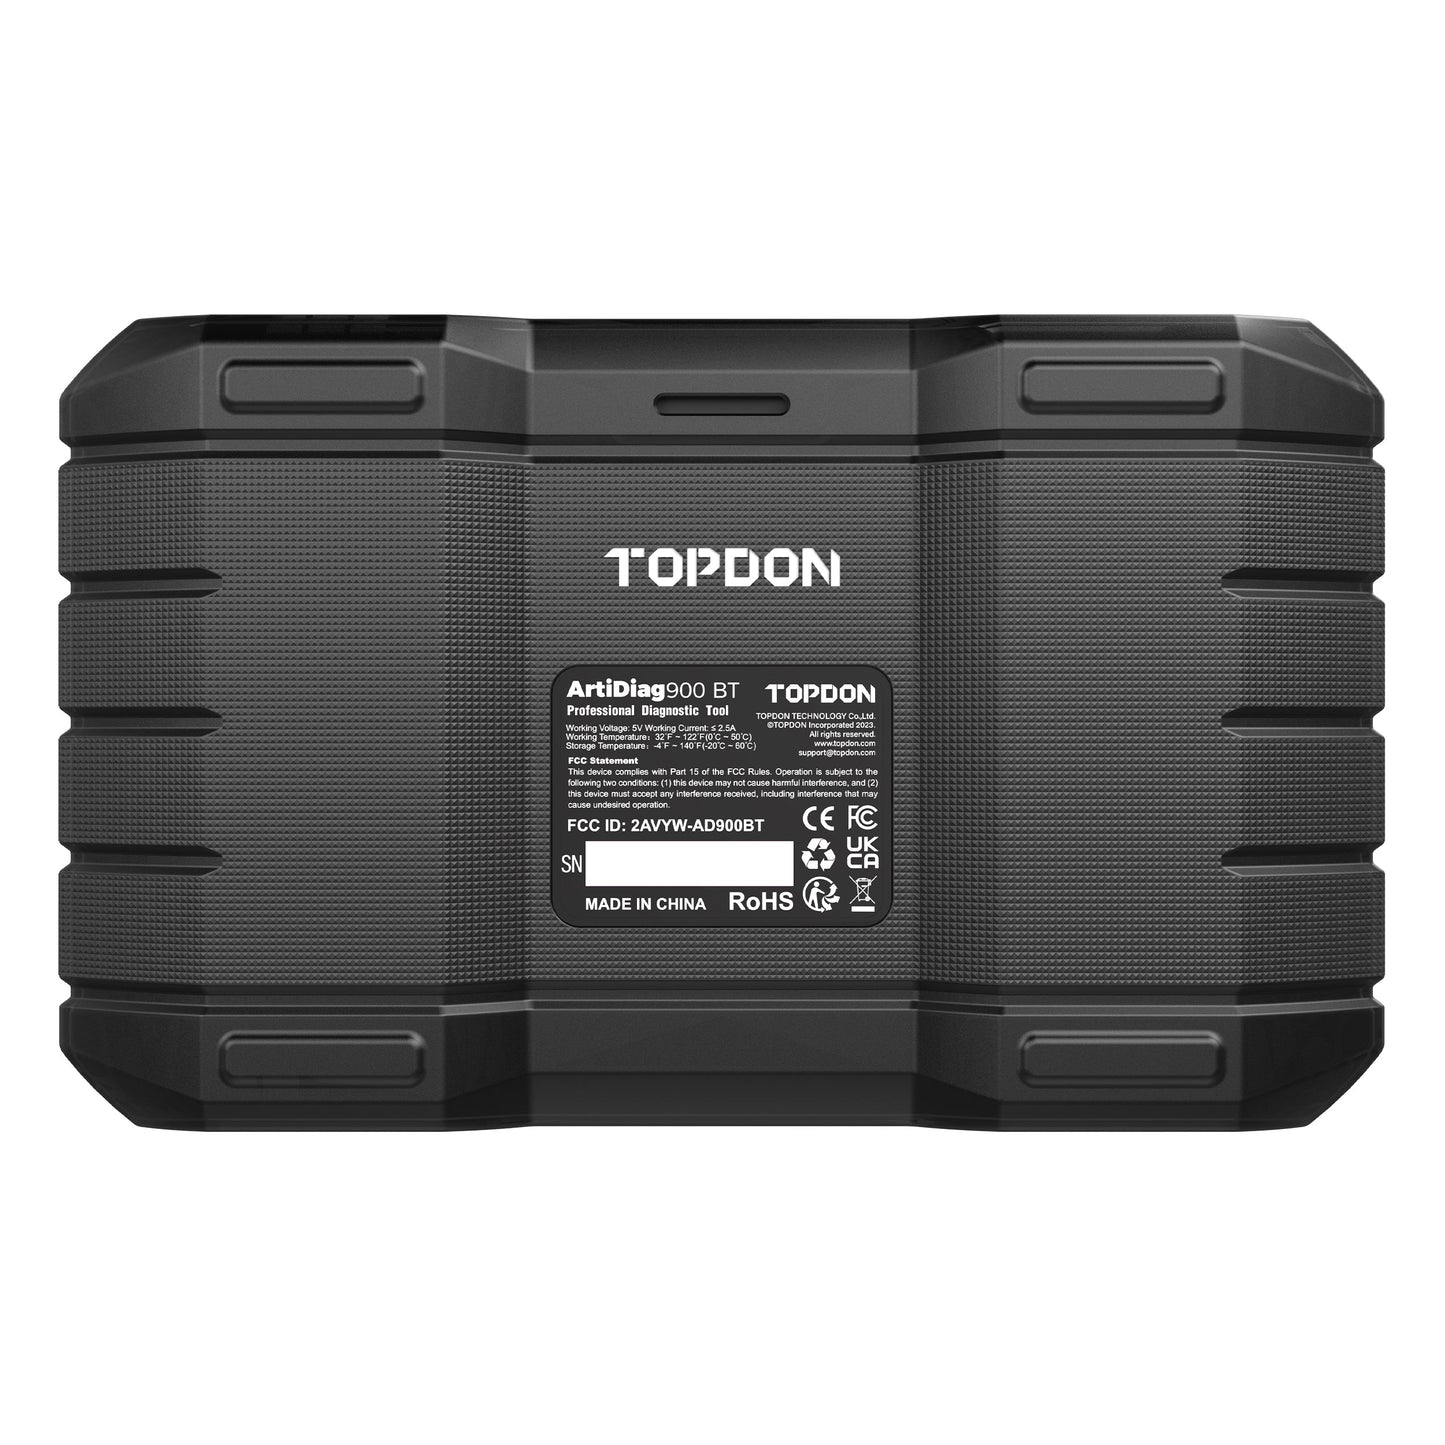 TOPDON  7" Bluetooth Scan Tool w/Serv Functions & Bi-Directional